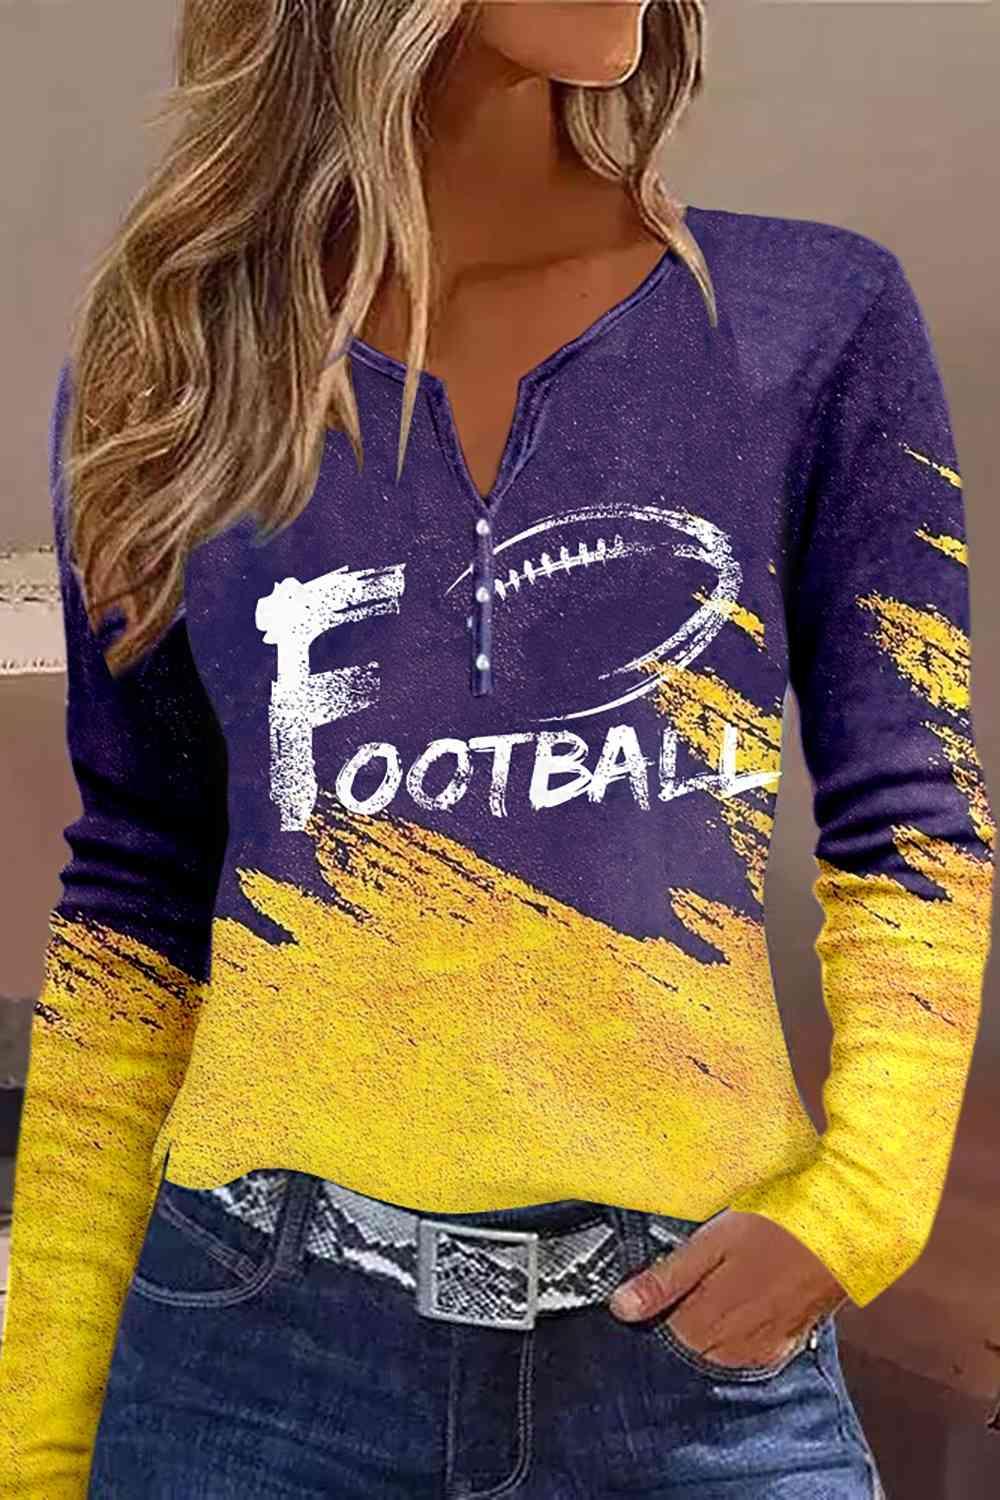 a woman wearing a purple and yellow football shirt